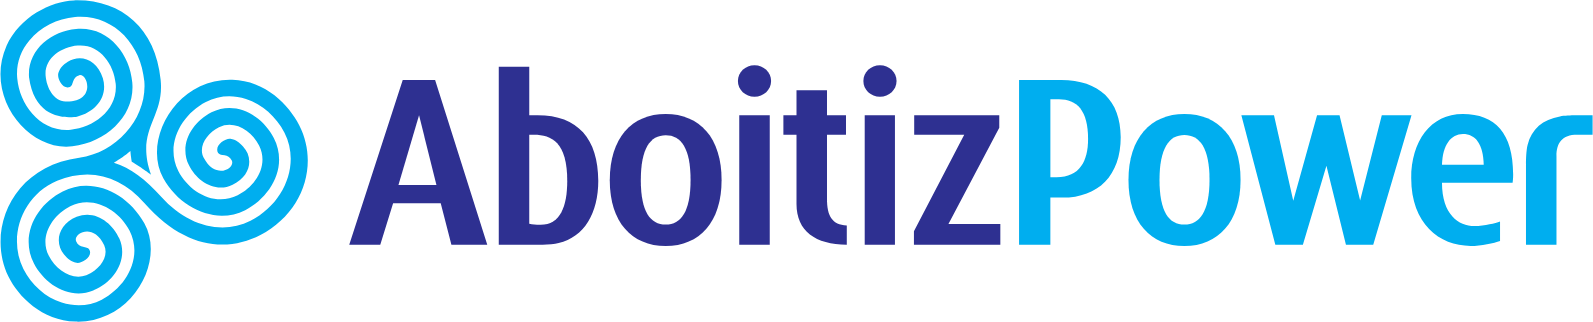 Aboitiz Power logo large (transparent PNG)